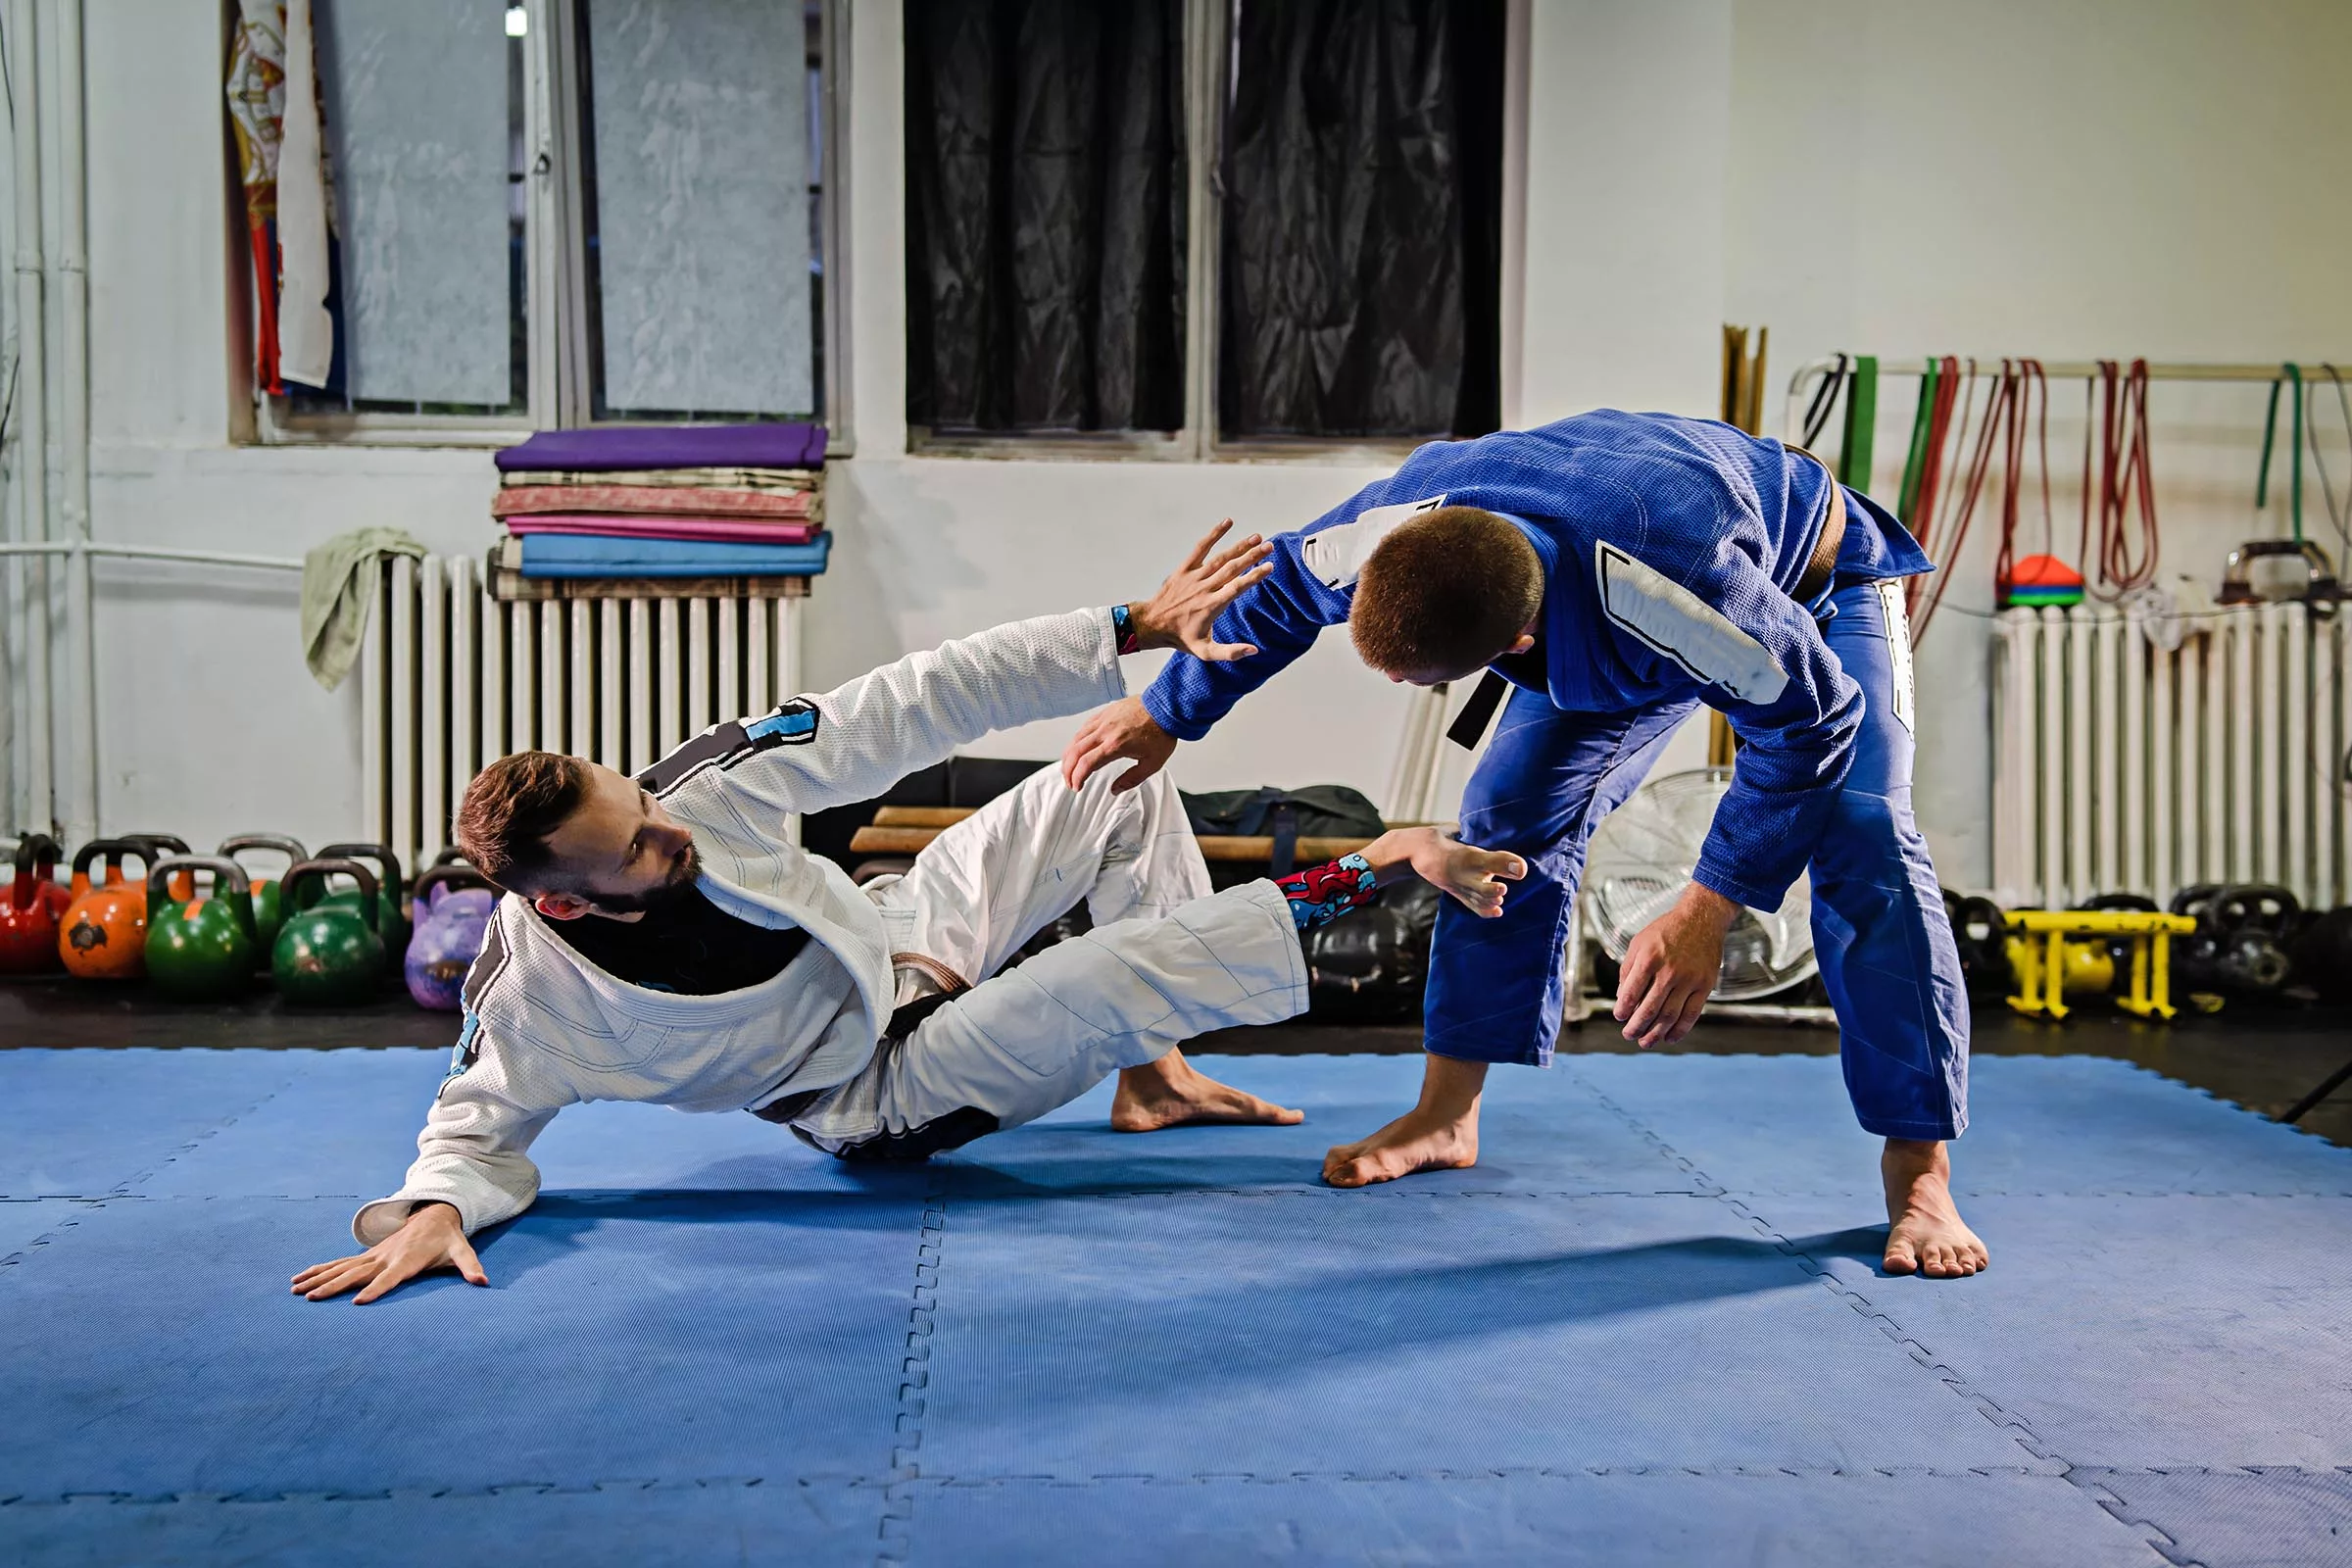 Brazilian Jiu Jitsu BJJ fighters training sparring on the mats at a gym